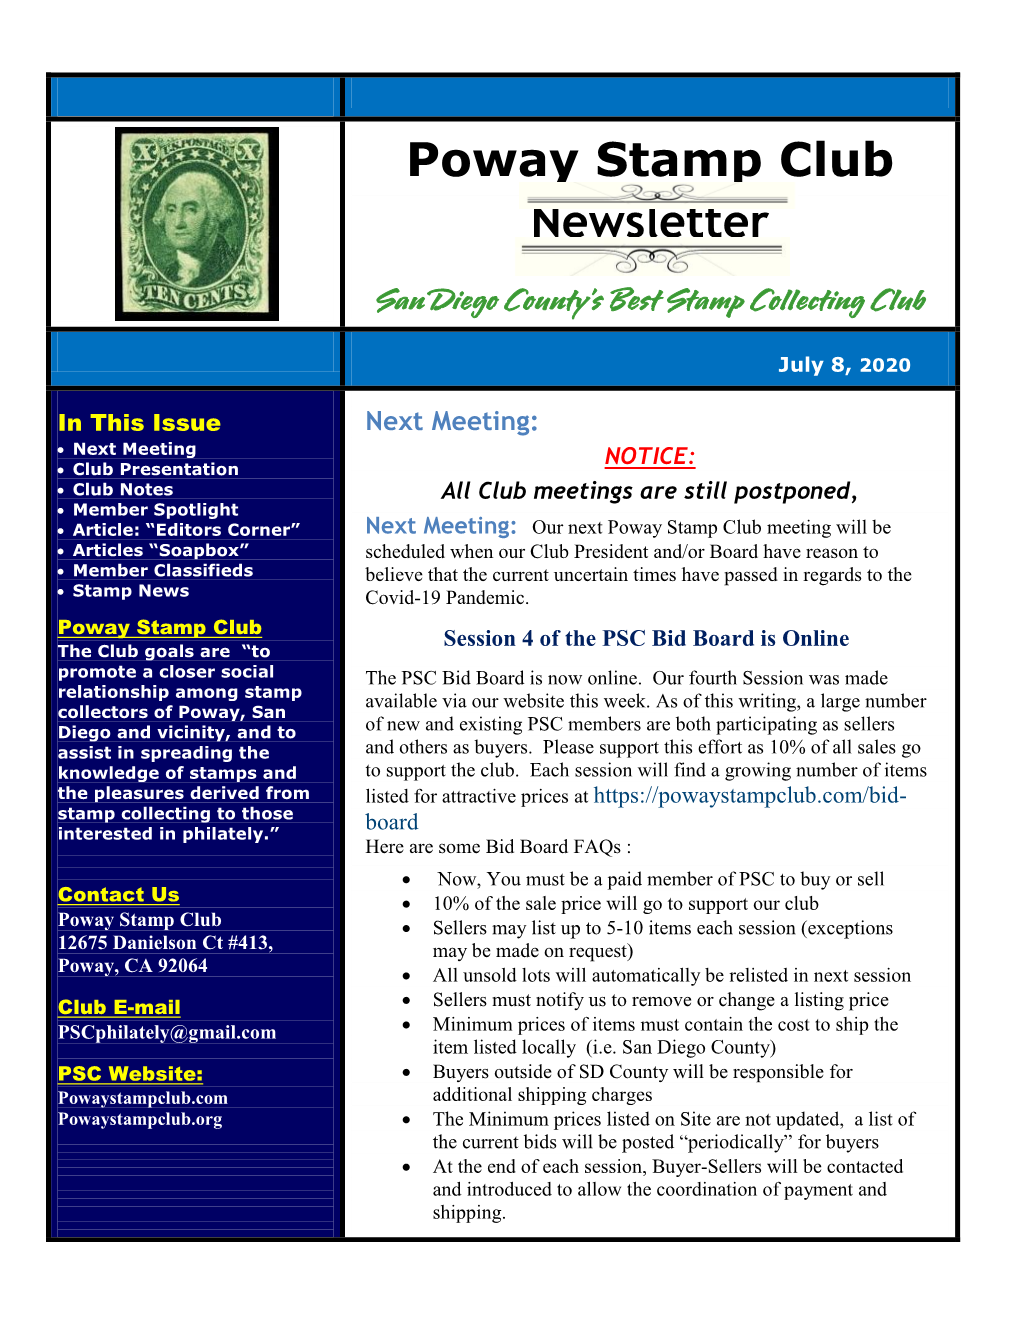 Poway Stamp Club Newsletter